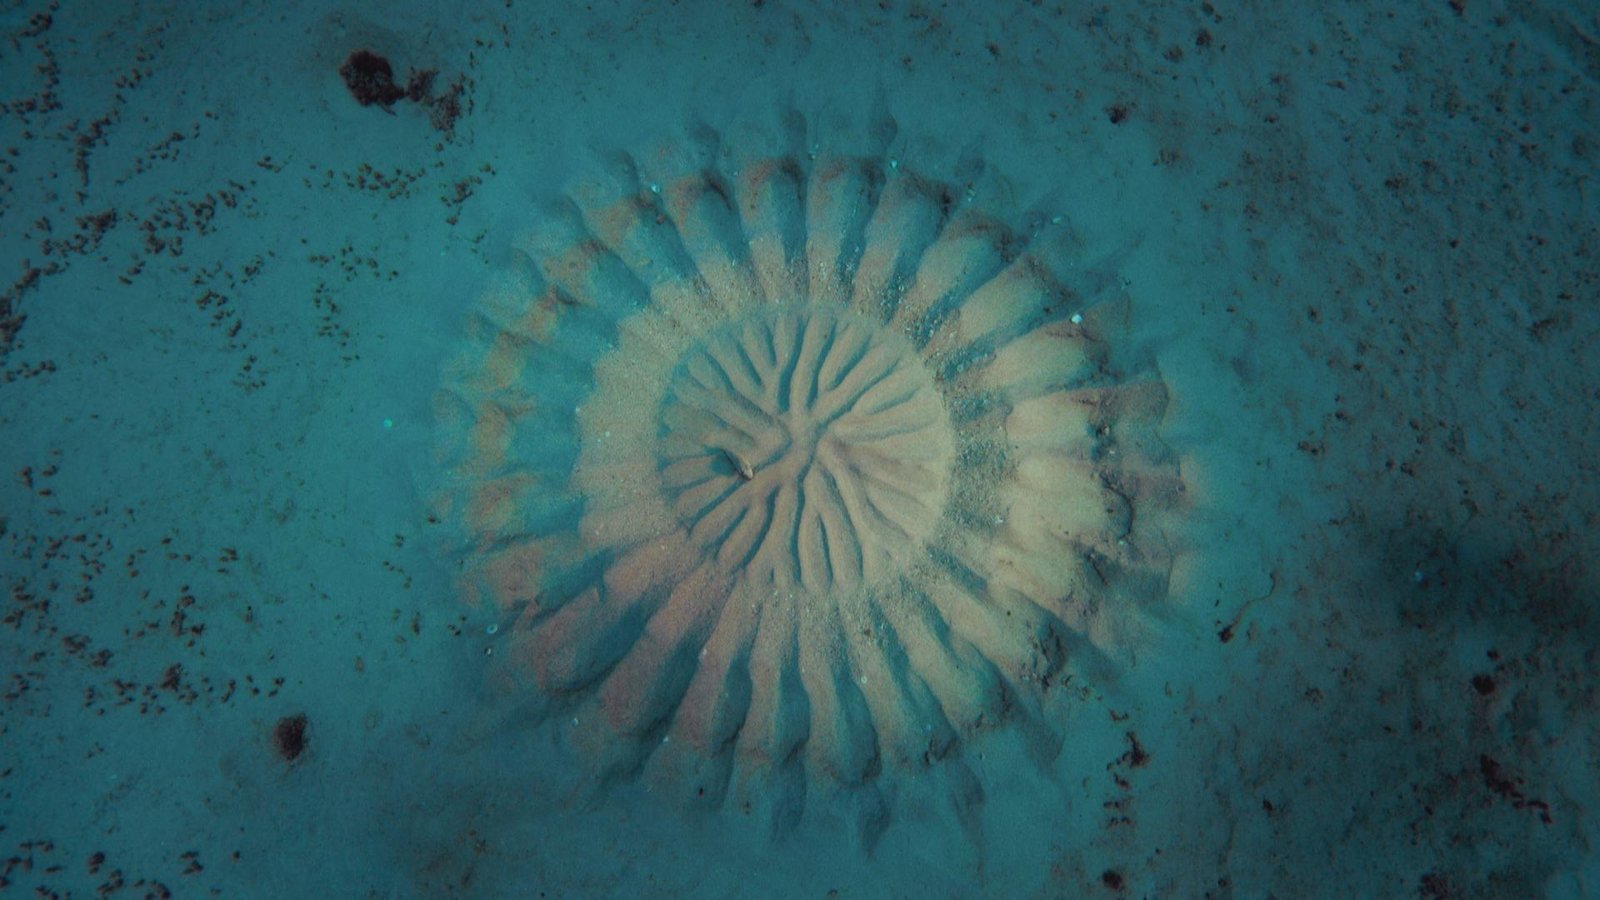 Male pufferfish make beautiful underwater circles